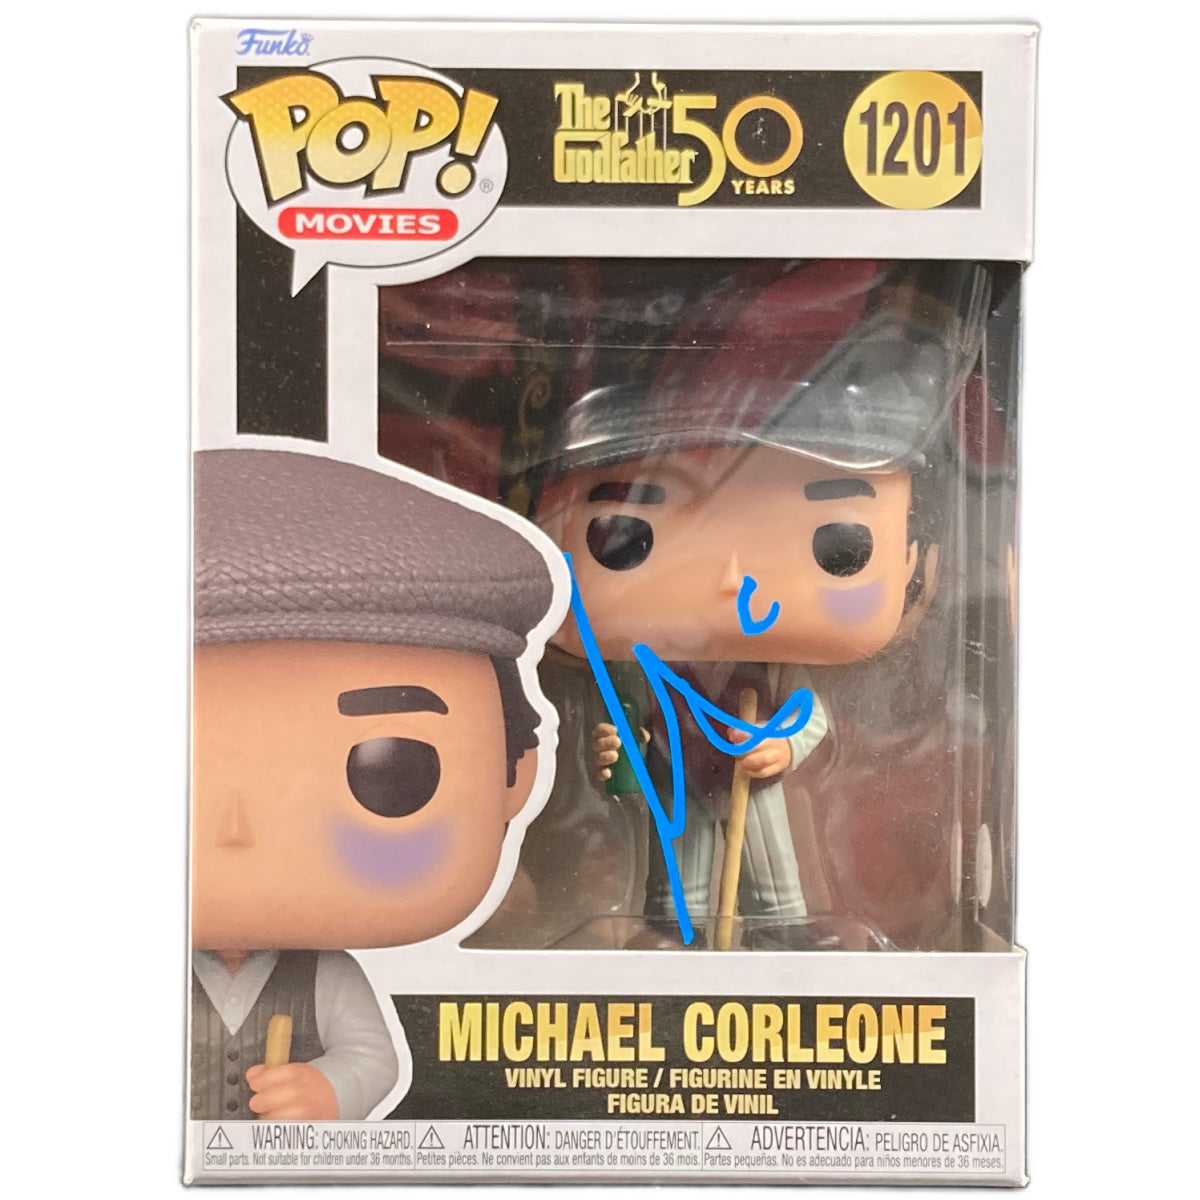 Al Pacino Signed Funko POP The Godfather Michael Corleone Autographed JSA COA